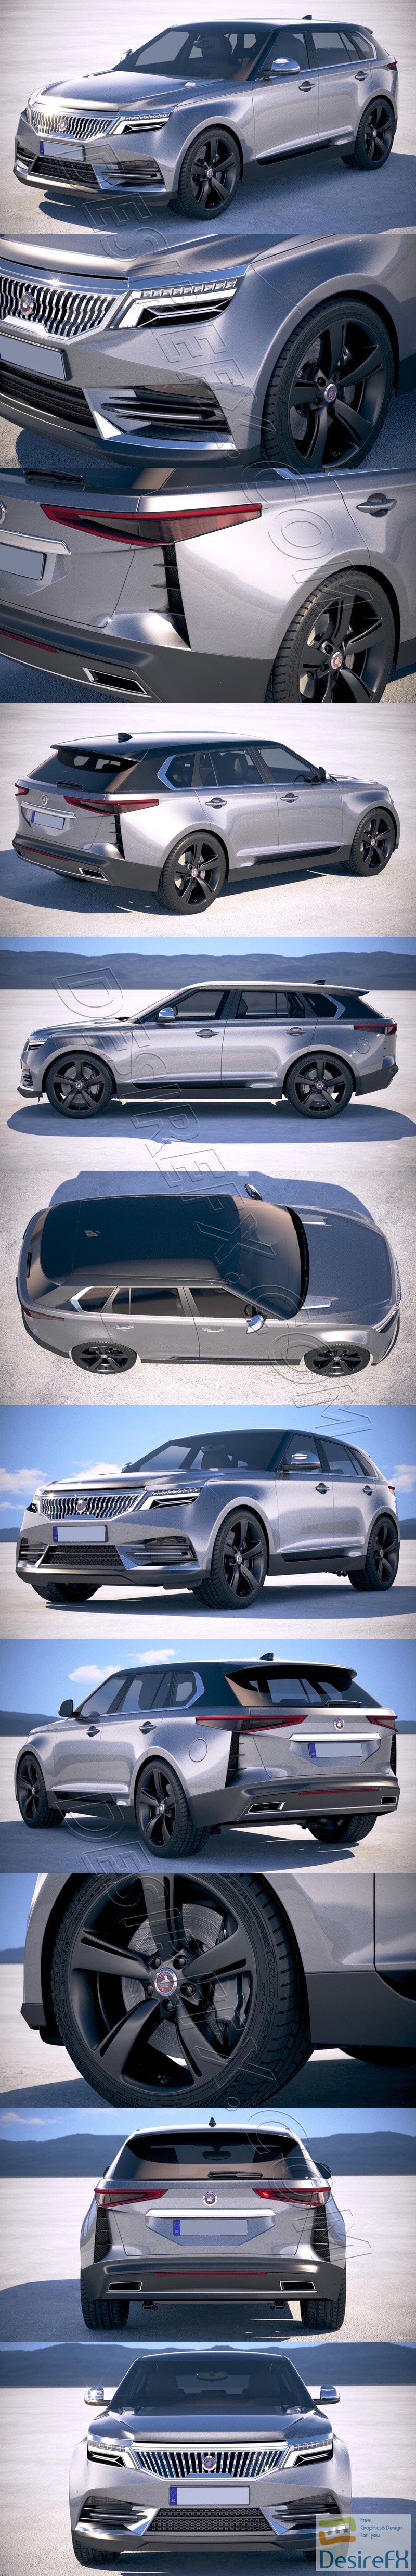 Generic Luxury SUV 2019 3D Model